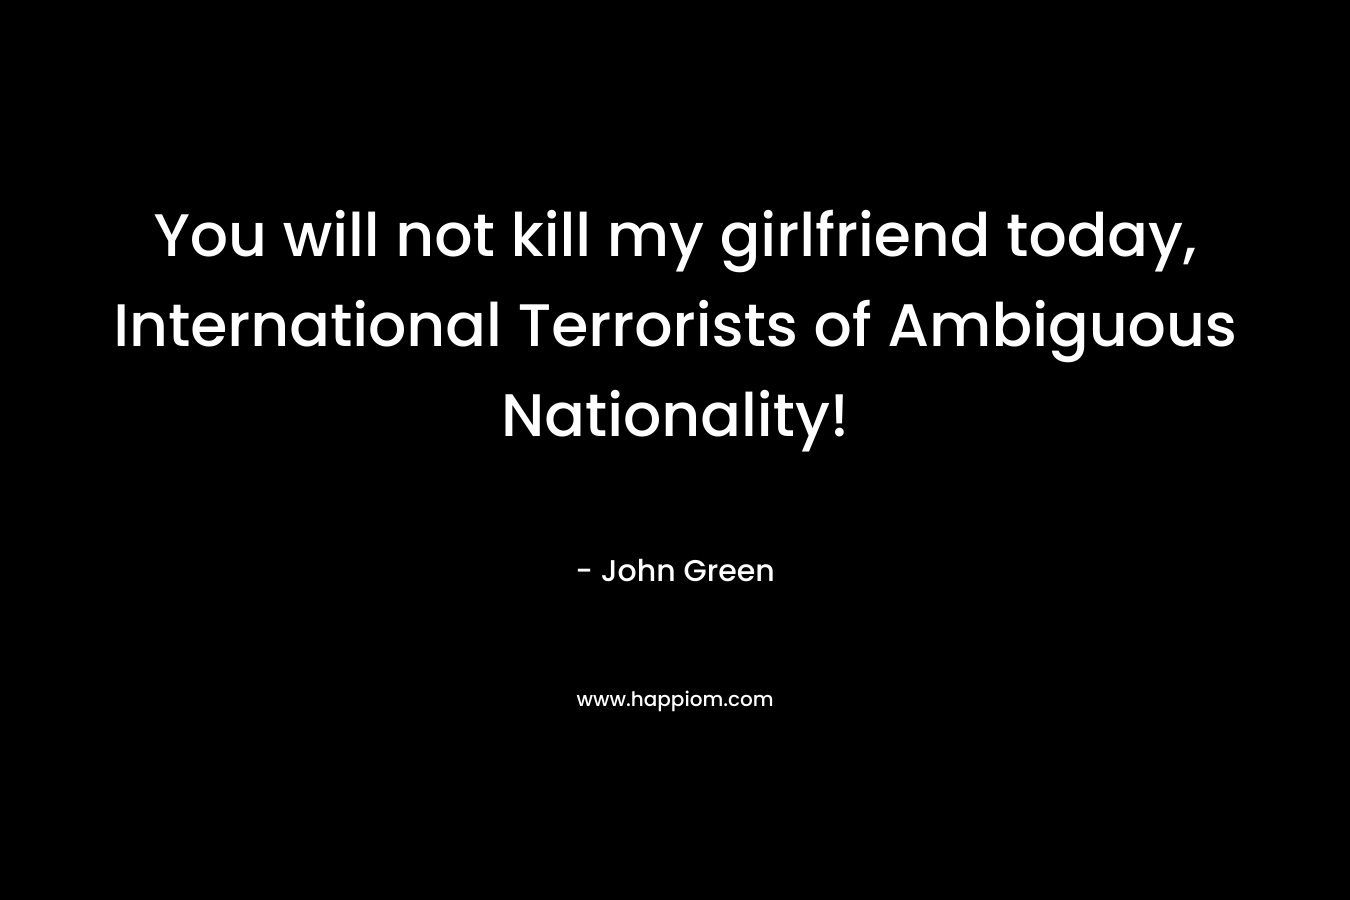 You will not kill my girlfriend today, International Terrorists of Ambiguous Nationality!